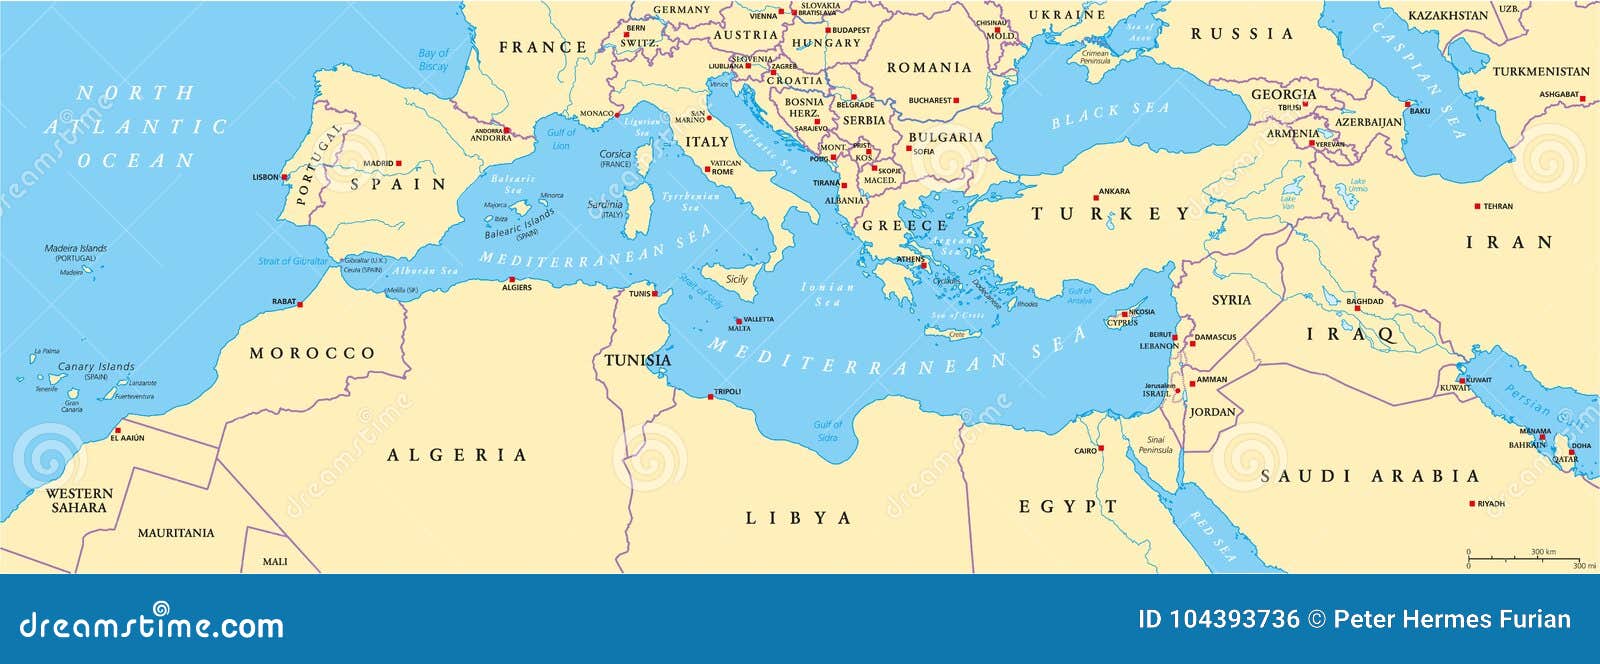 Mediterranean Basin Political Map Mediterranean Basin Political Map South Europe North Africa Near East Capitals National 104393736 